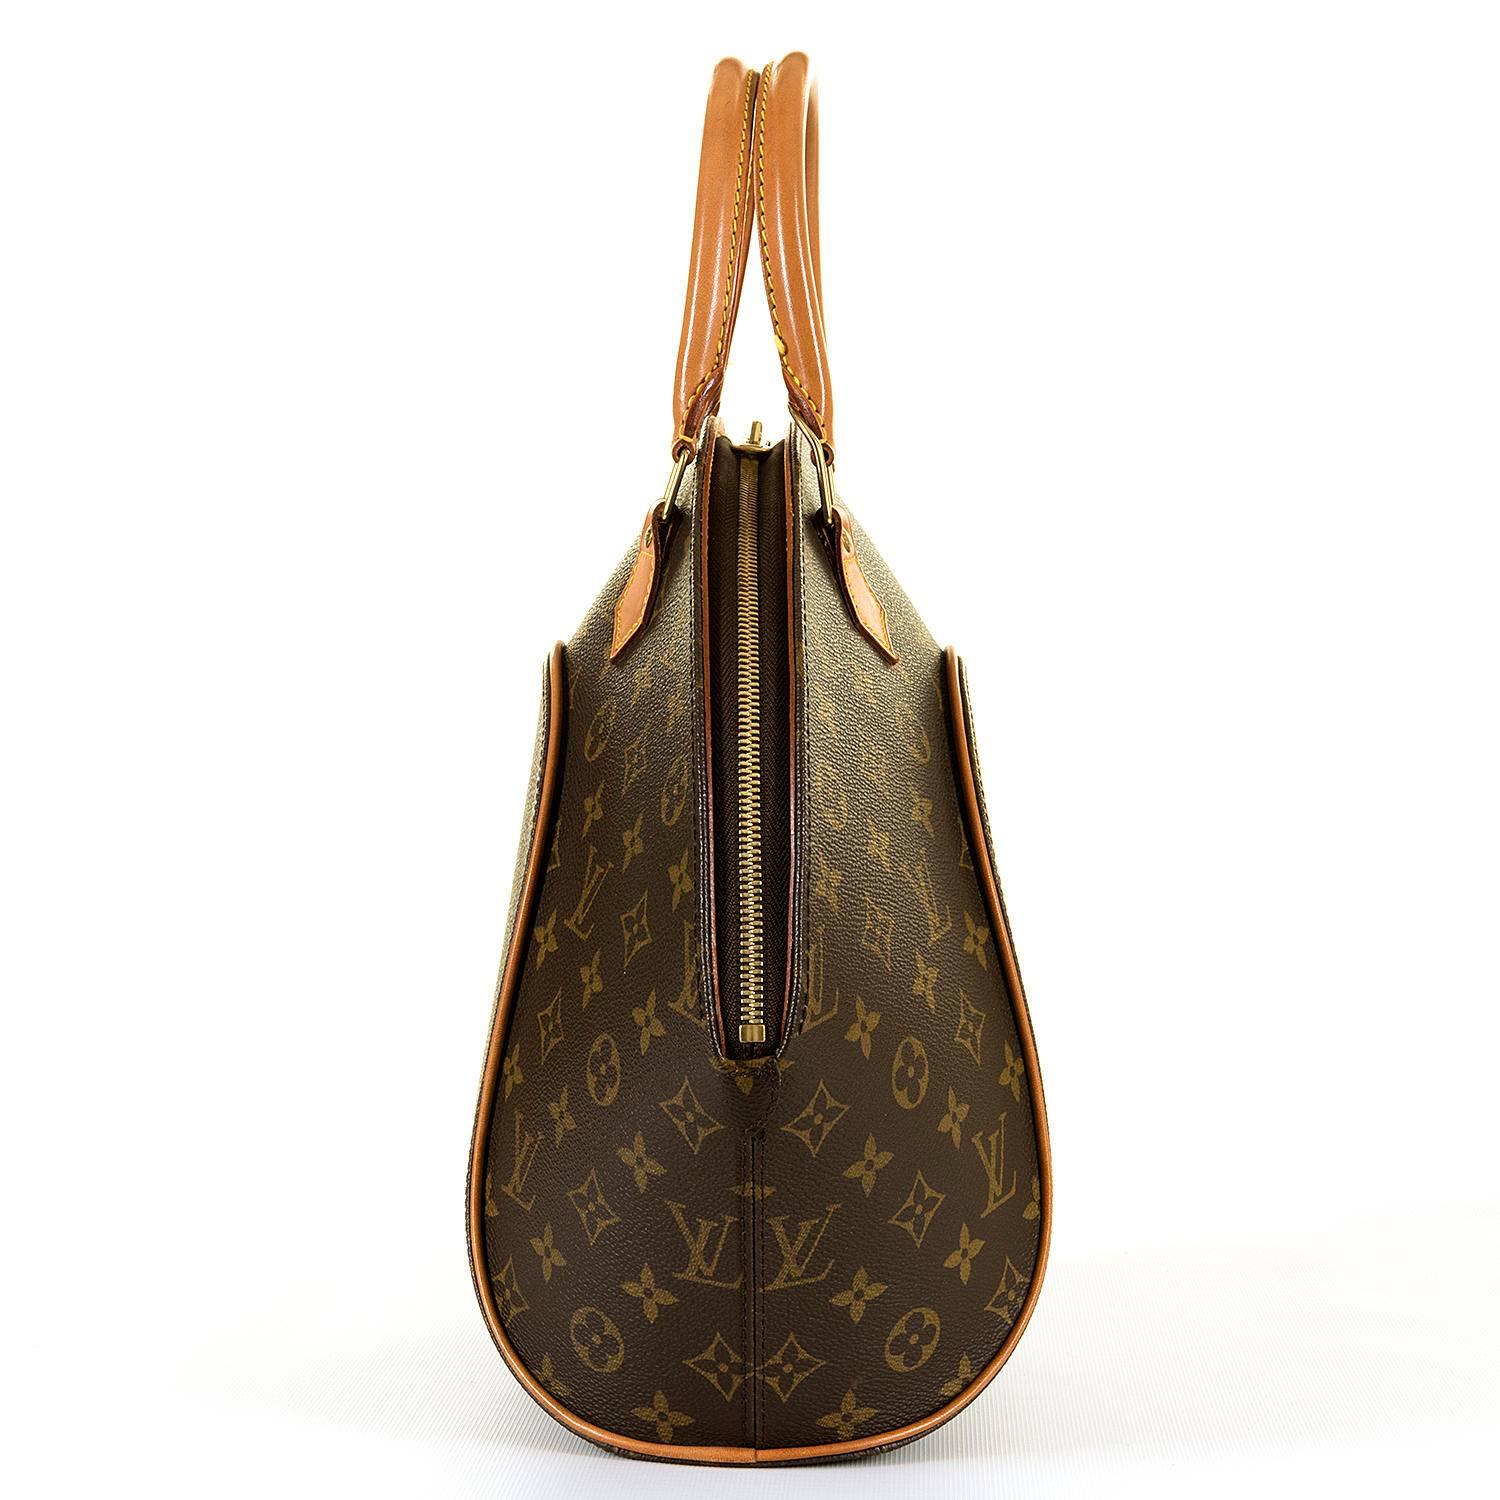 Black Louis Vuitton 'Sac Ellipse' GM 26cm Logo Bag with Natural Leather Trim & Gold HW